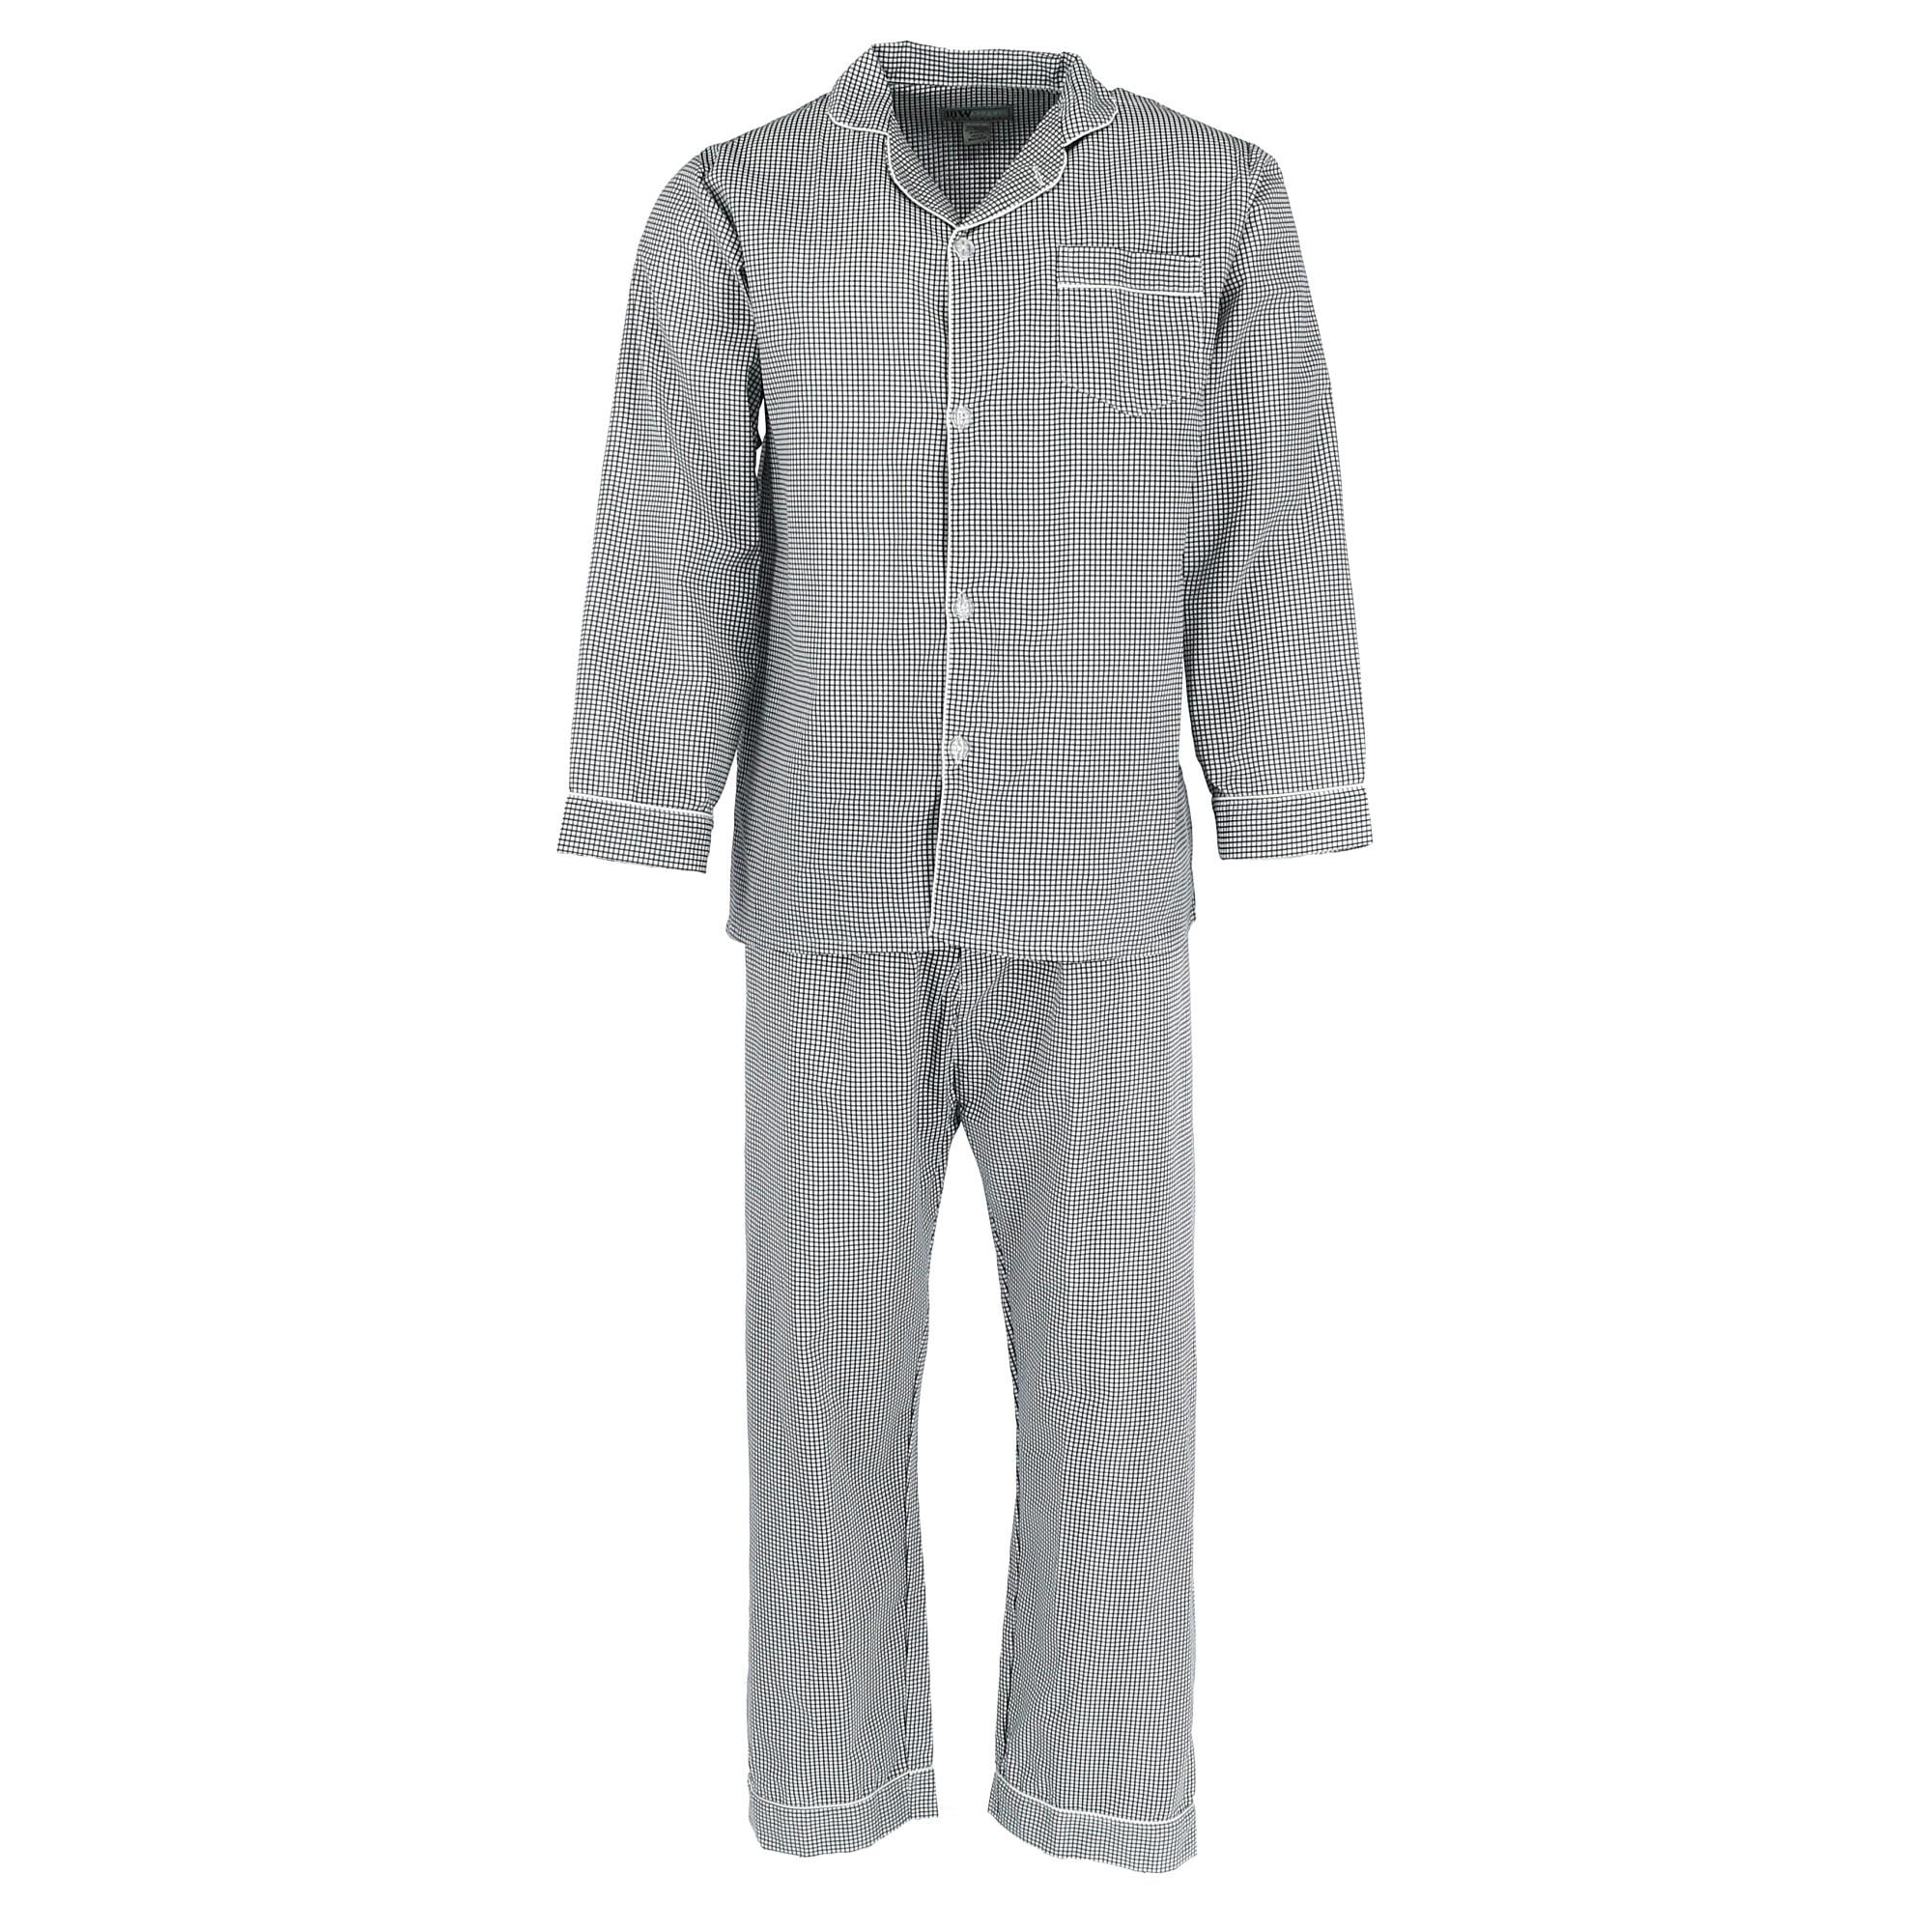 Ten West Apparel Men's Long Sleeve Long Leg Pajama Set | Walmart Canada